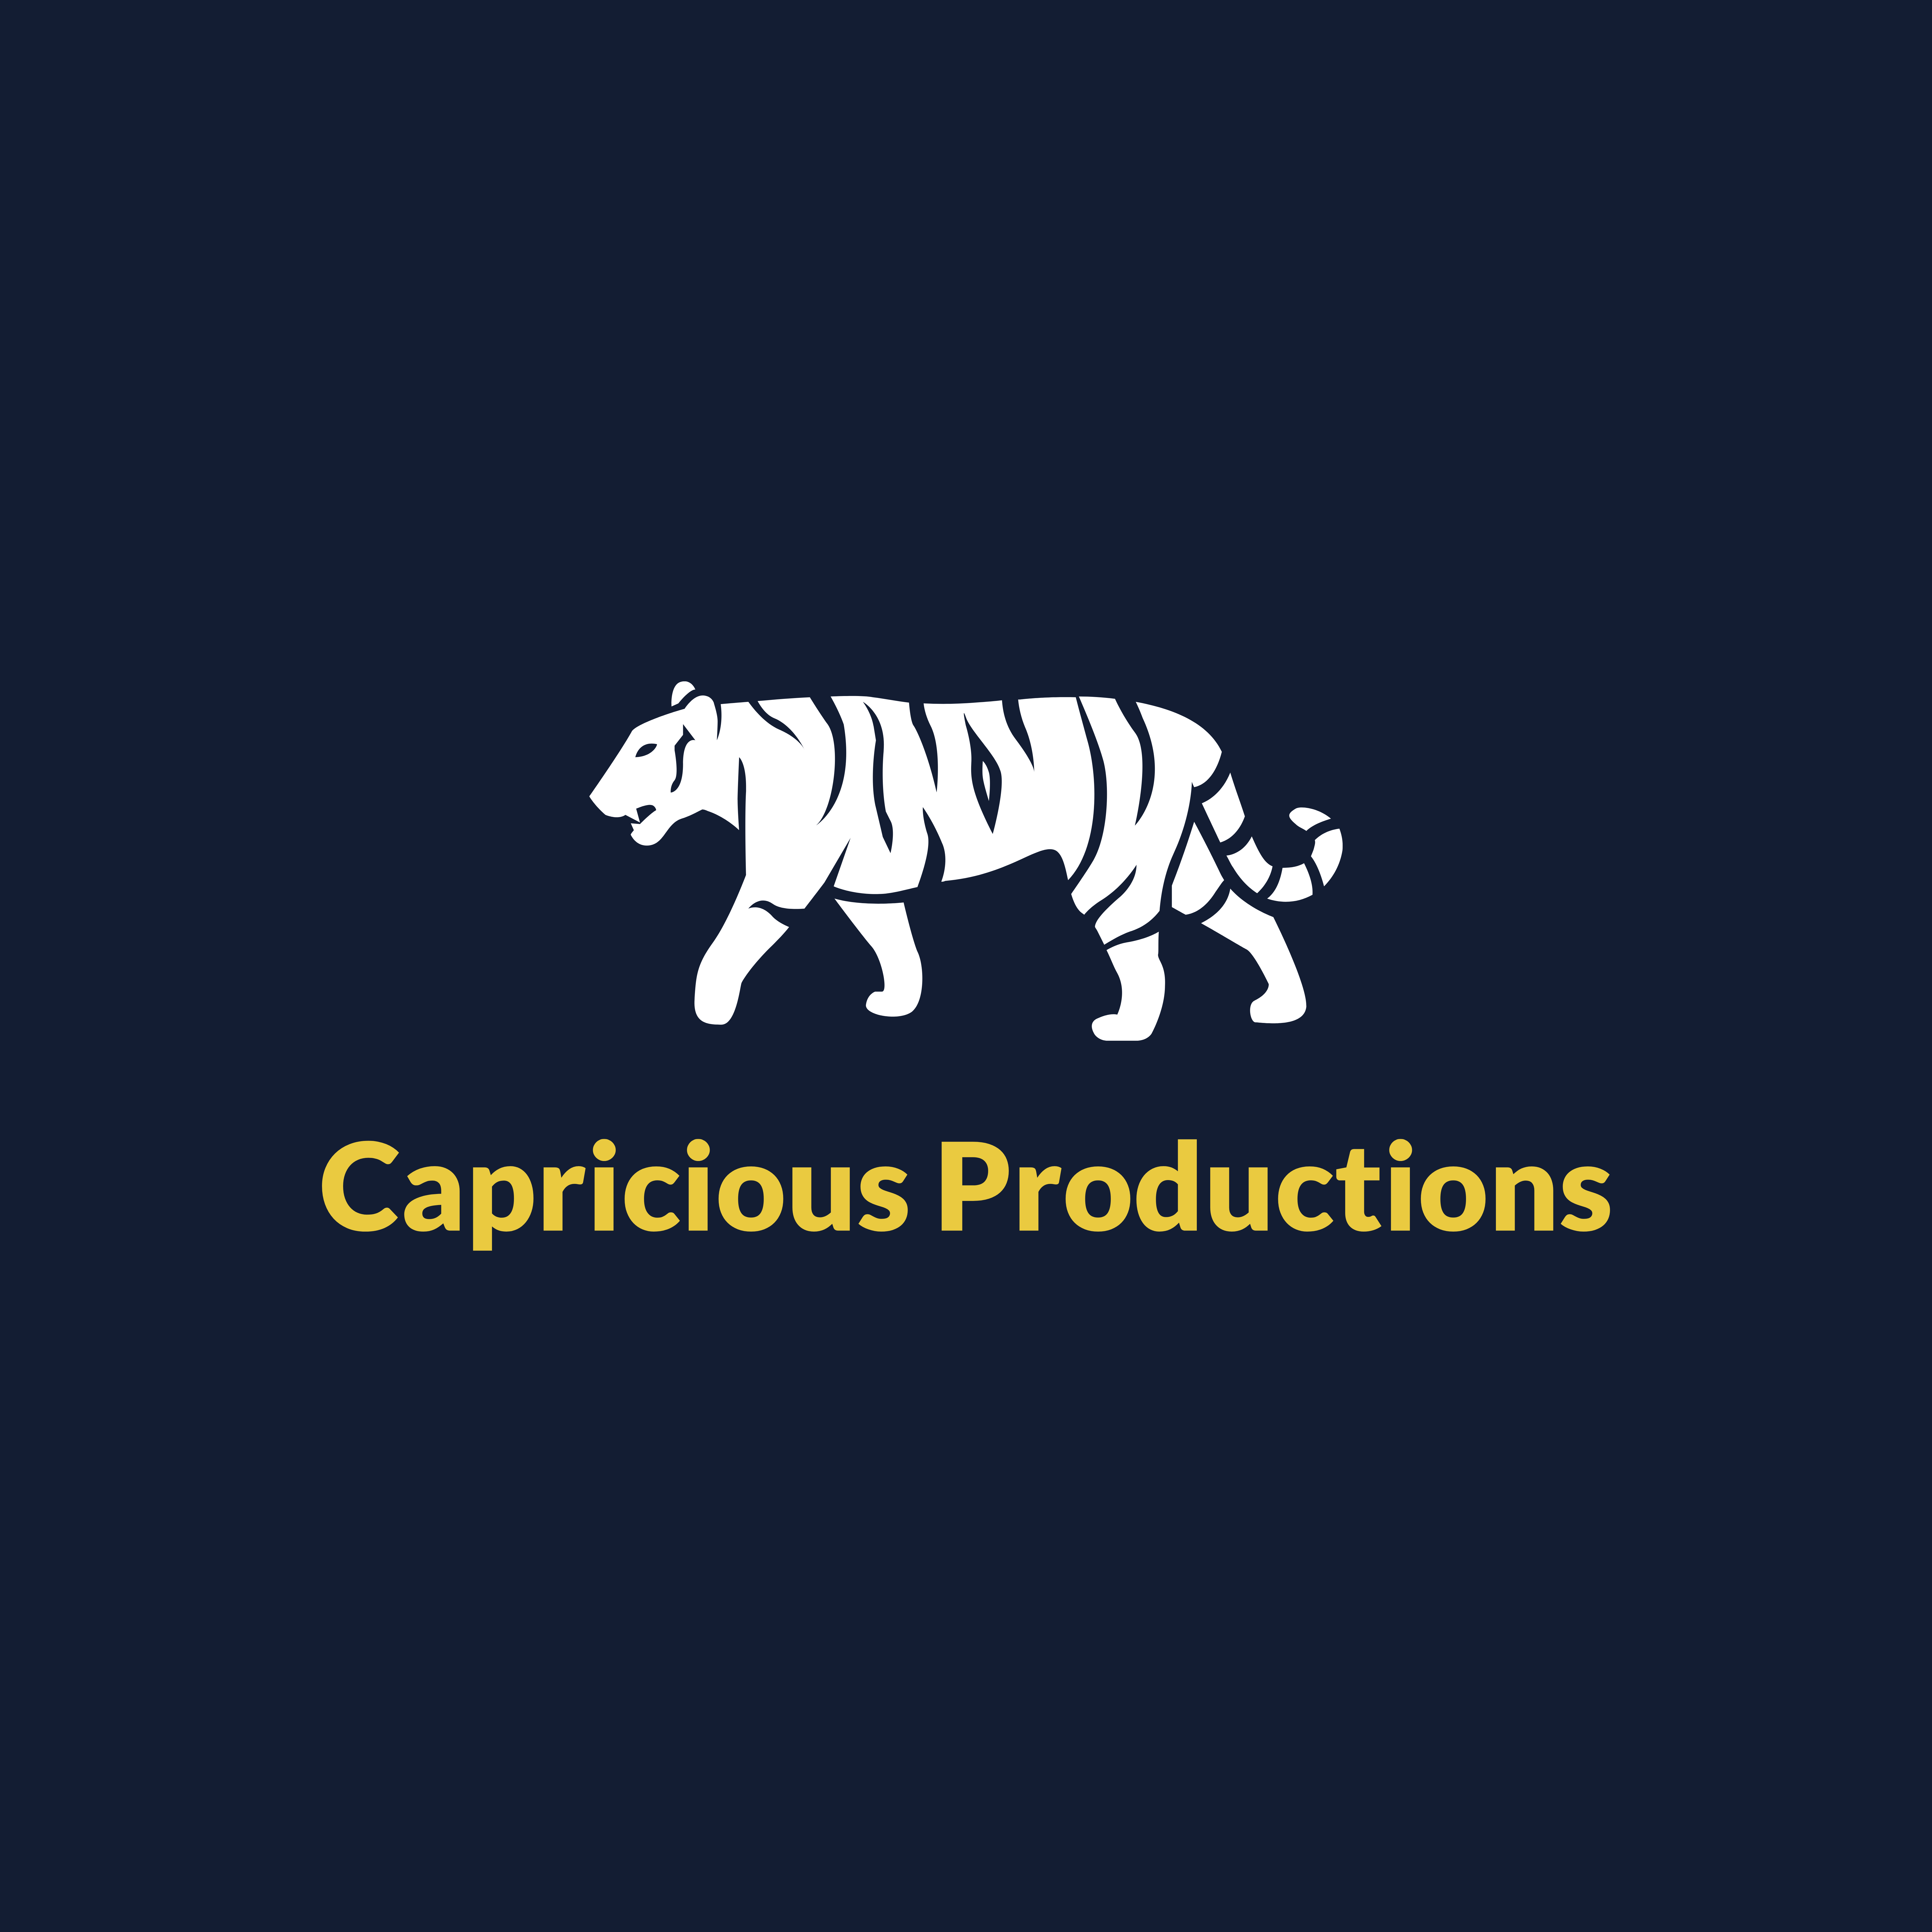 Capricious Productions